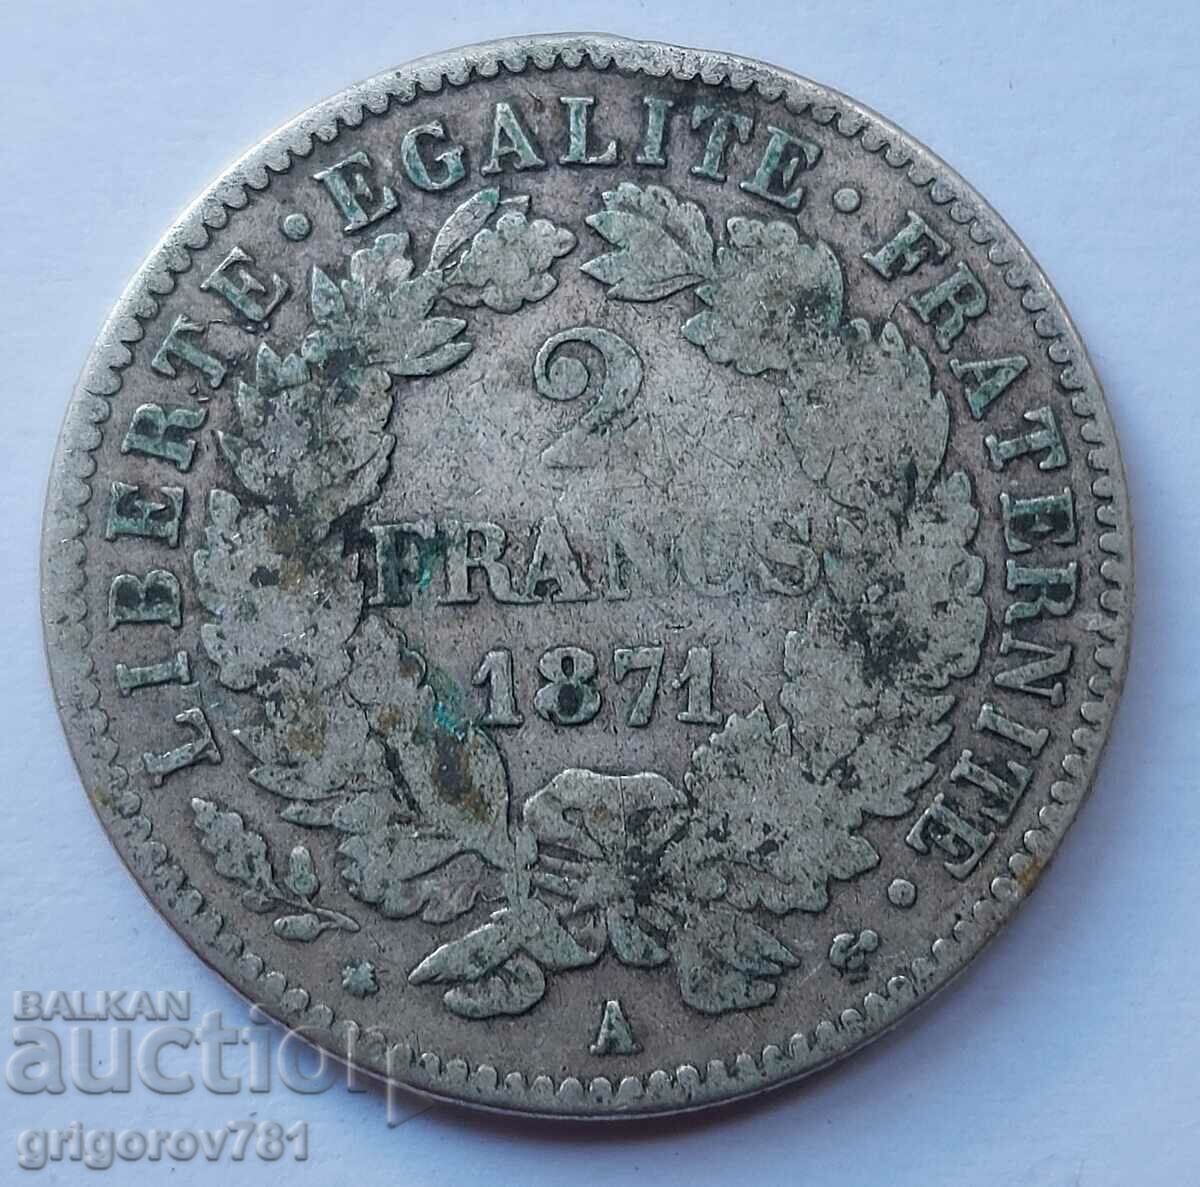 2 francs silver France 1871 A - silver coin №26